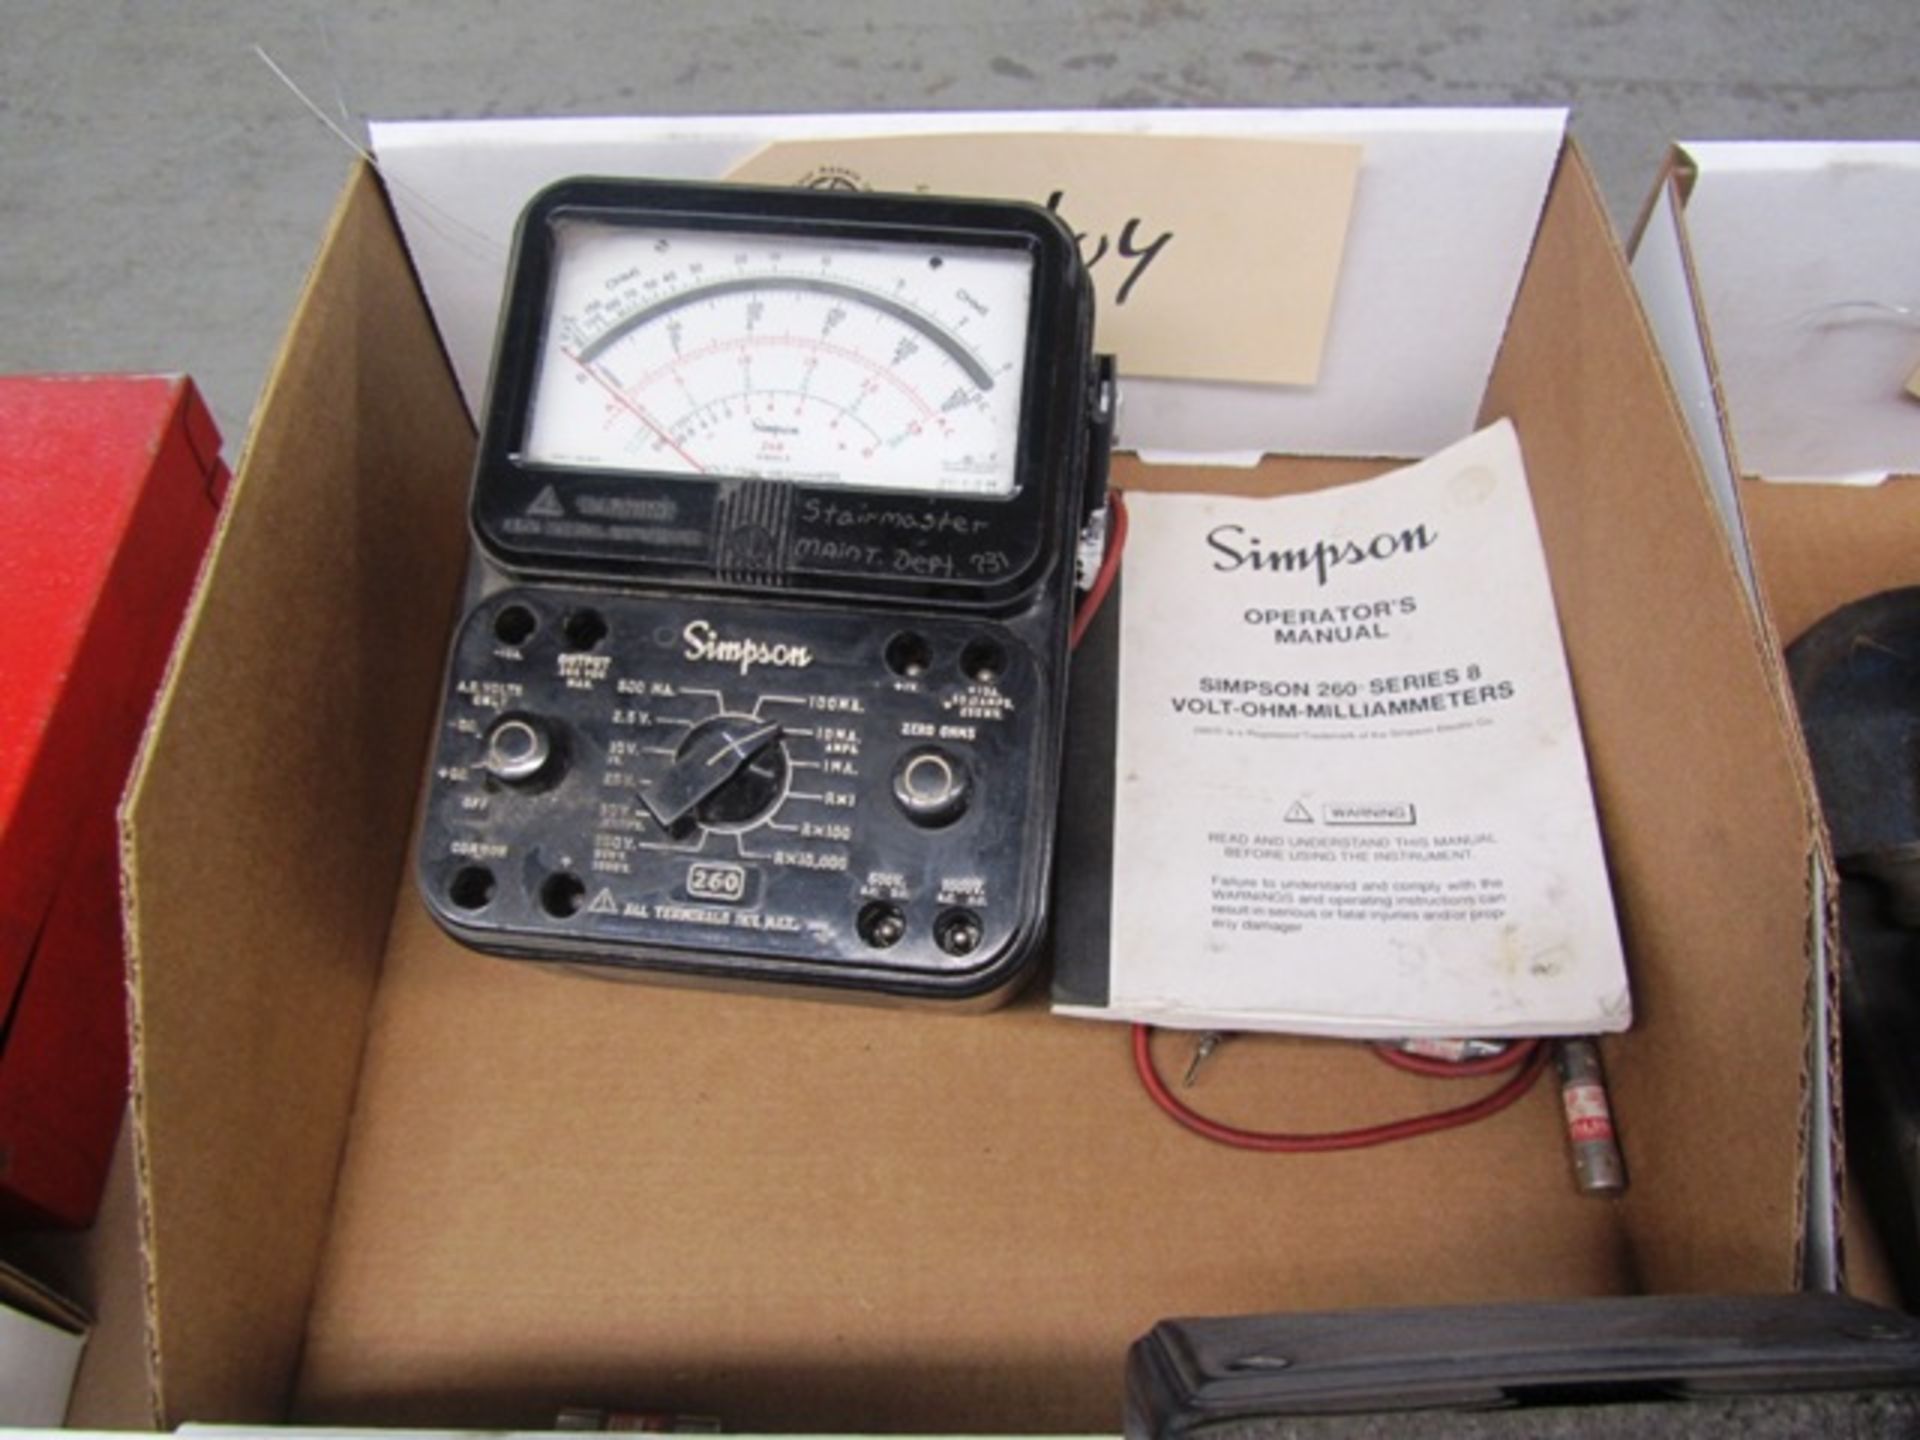 Simpson 260 Series 8 Volt-Ohm Milliammeter Gauge